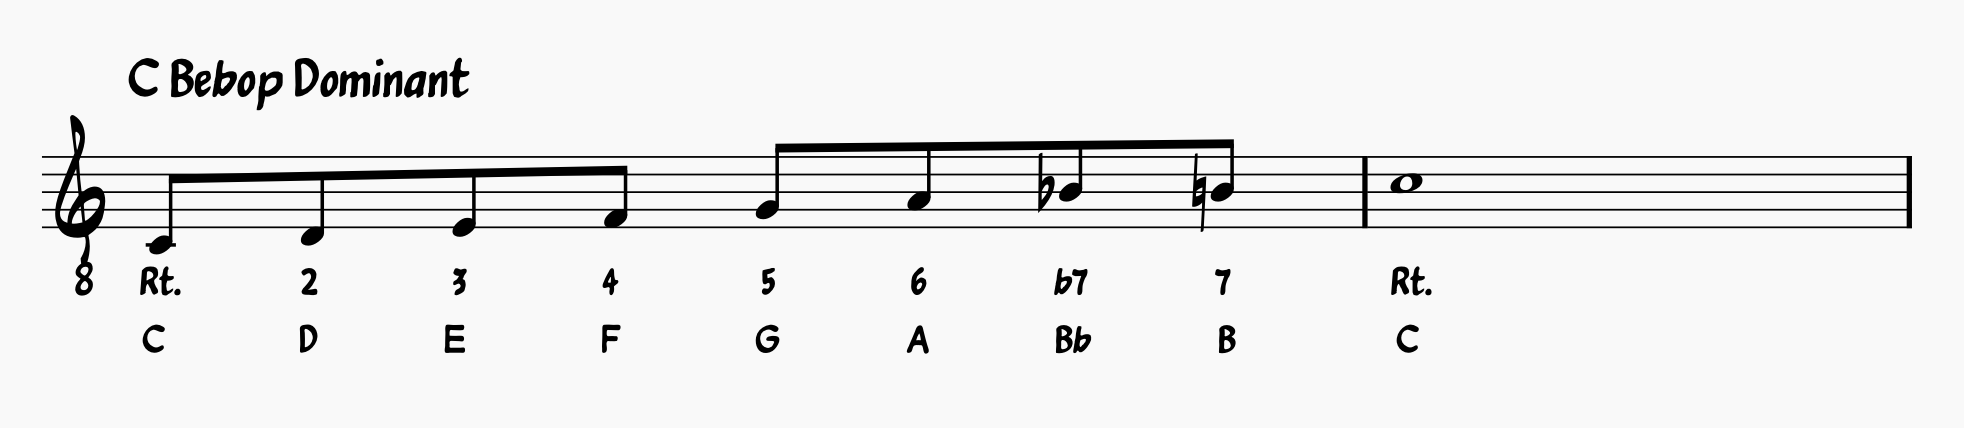 Blues Scale Guide: C Bebop Dominant Blues Scale